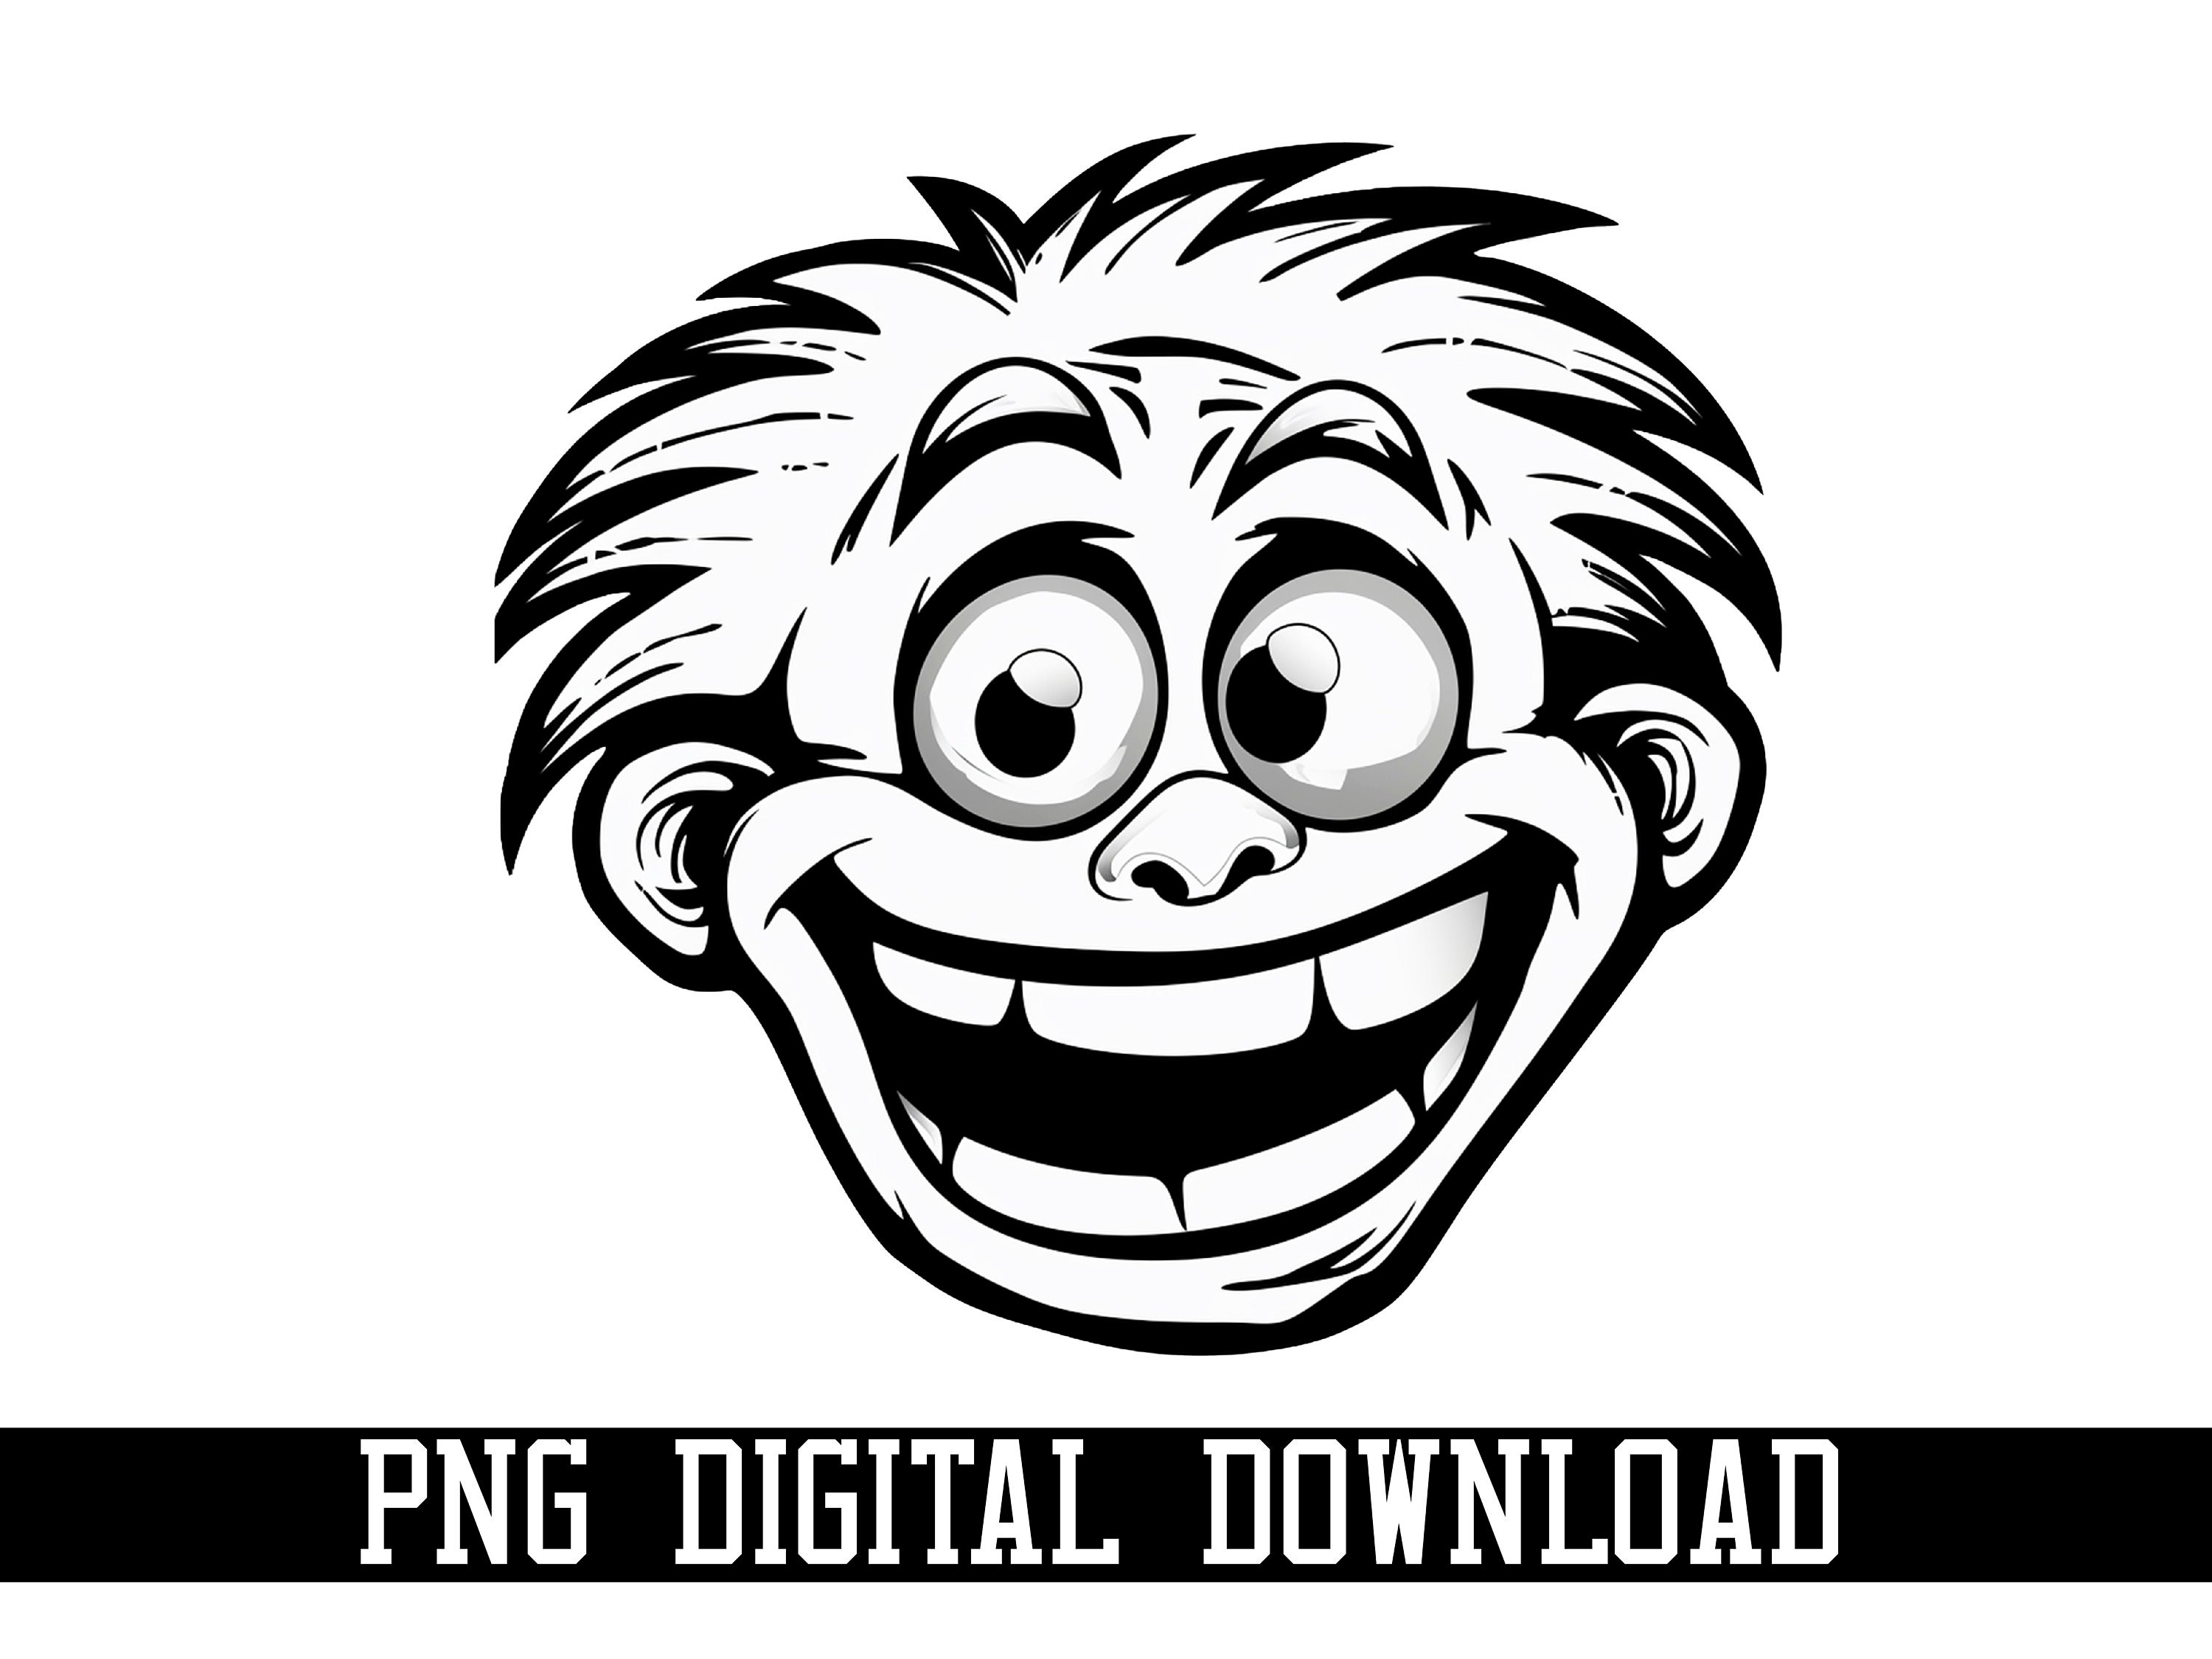 Troll Face Santa Hat SVG #1 Funny Meme Christmas Design Cartoon Mascot Cut  File DXF PNG Clipart Silhouette Cricut